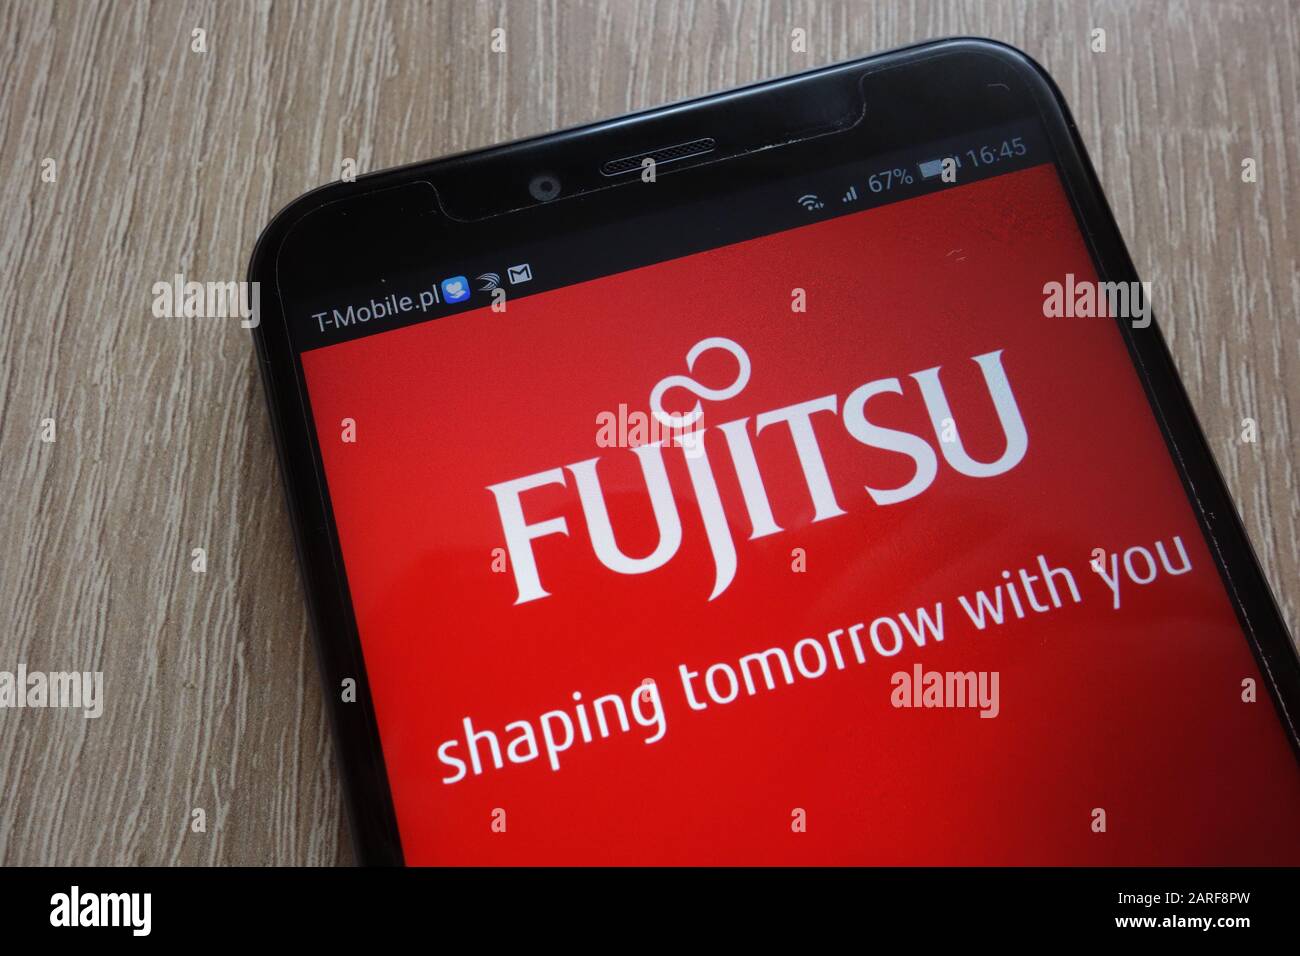 Fujitsu logo displayed on a modern smartphone Stock Photo